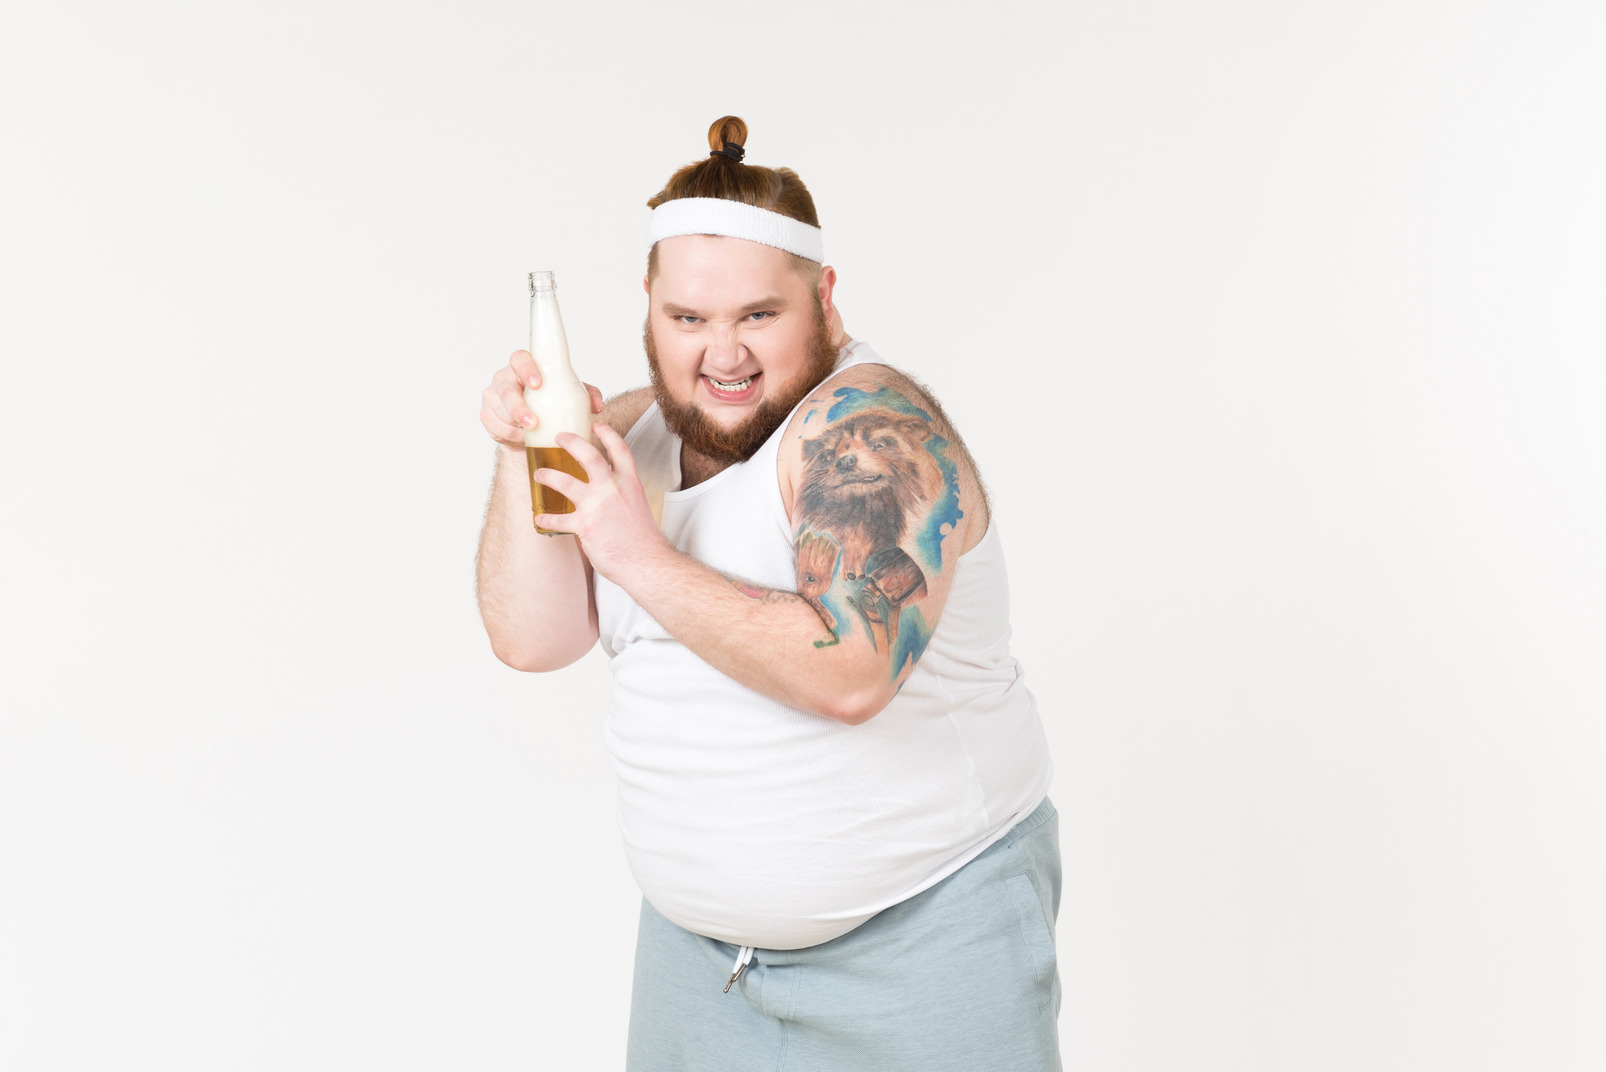 A fat man in sportswear holding a bottle of bear with evil grin